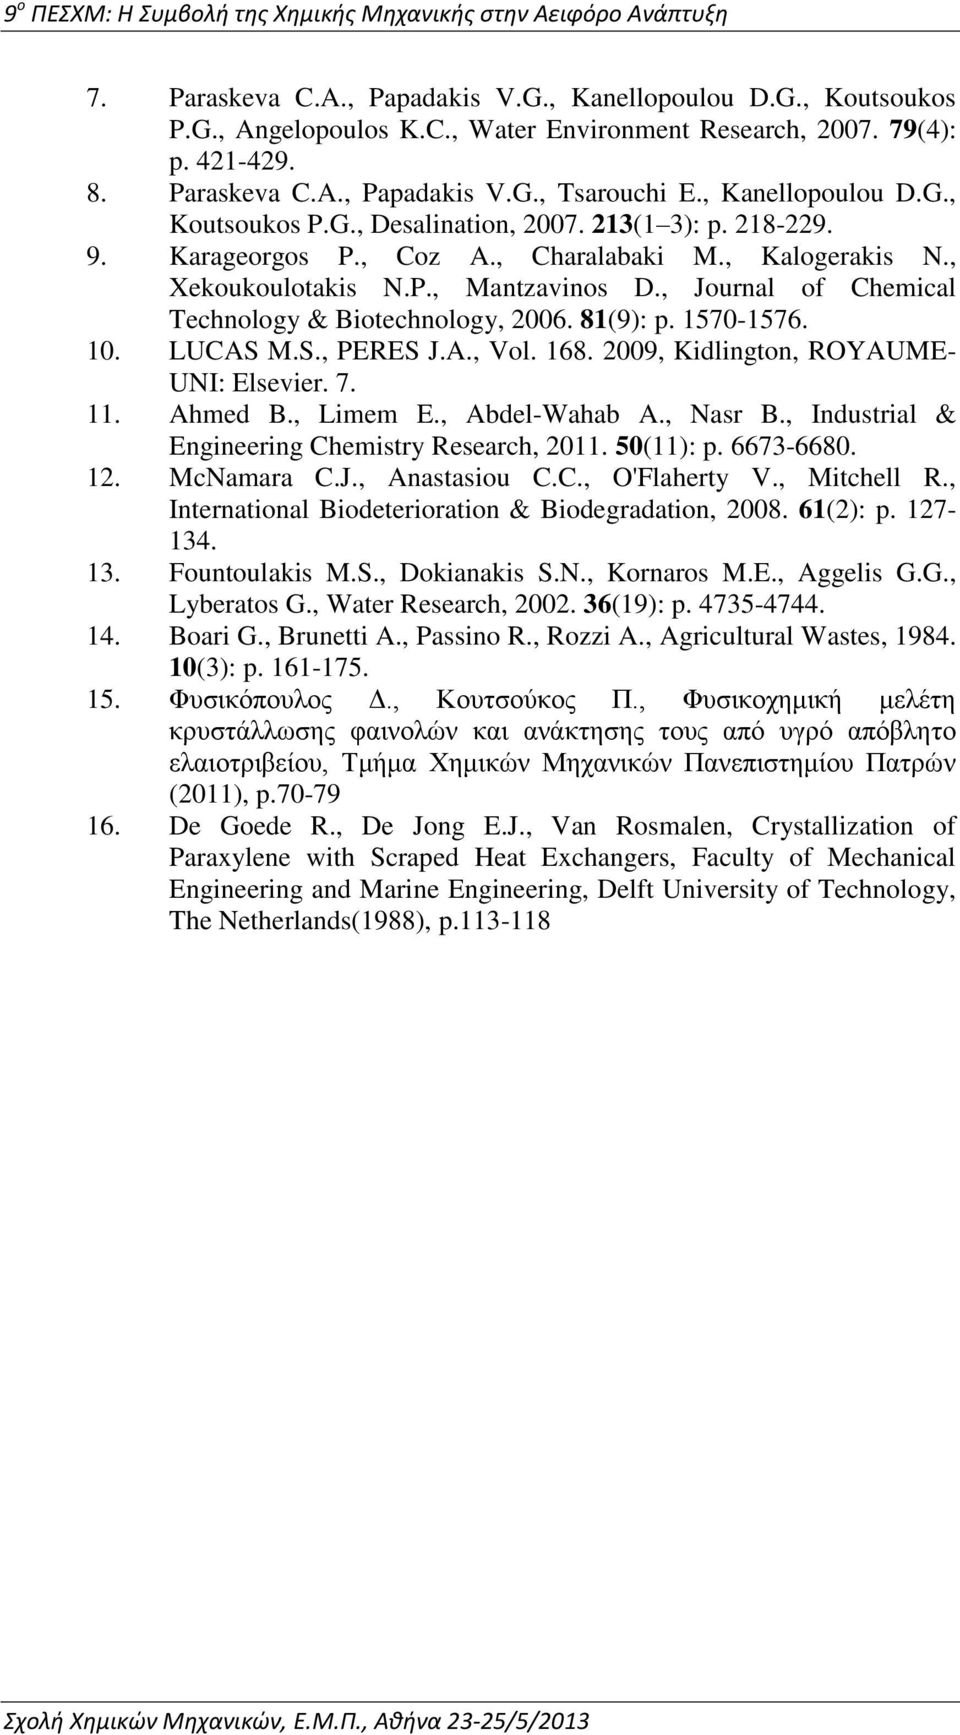 , Journal of Chemical Technology & Biotechnology, 006. 81(9): p. 1570-1576. 10. LUCAS M.S., PERES J.A., Vol. 168. 009, Kidlington, ROYAUME- UNI: Elsevier. 7. 11. Ahmed B., Limem E., Abdel-Wahab A.